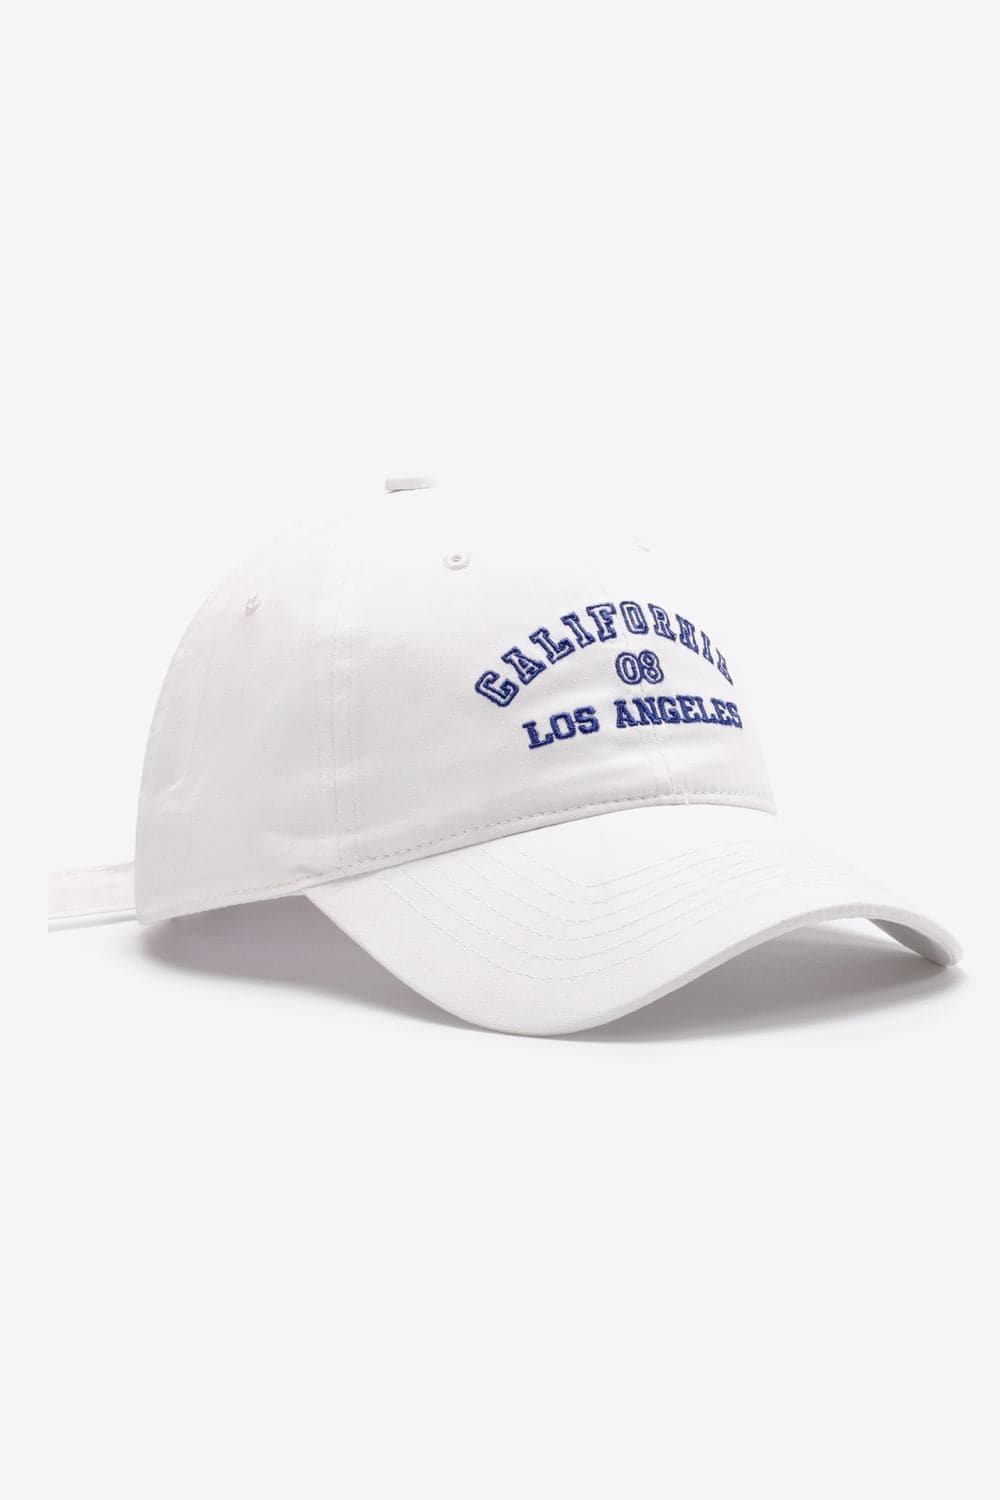 CALIFORNIA LOS ANGELES Adjustable Baseball Cap, Multiple Colors - SwagglyLife Home & Fashion